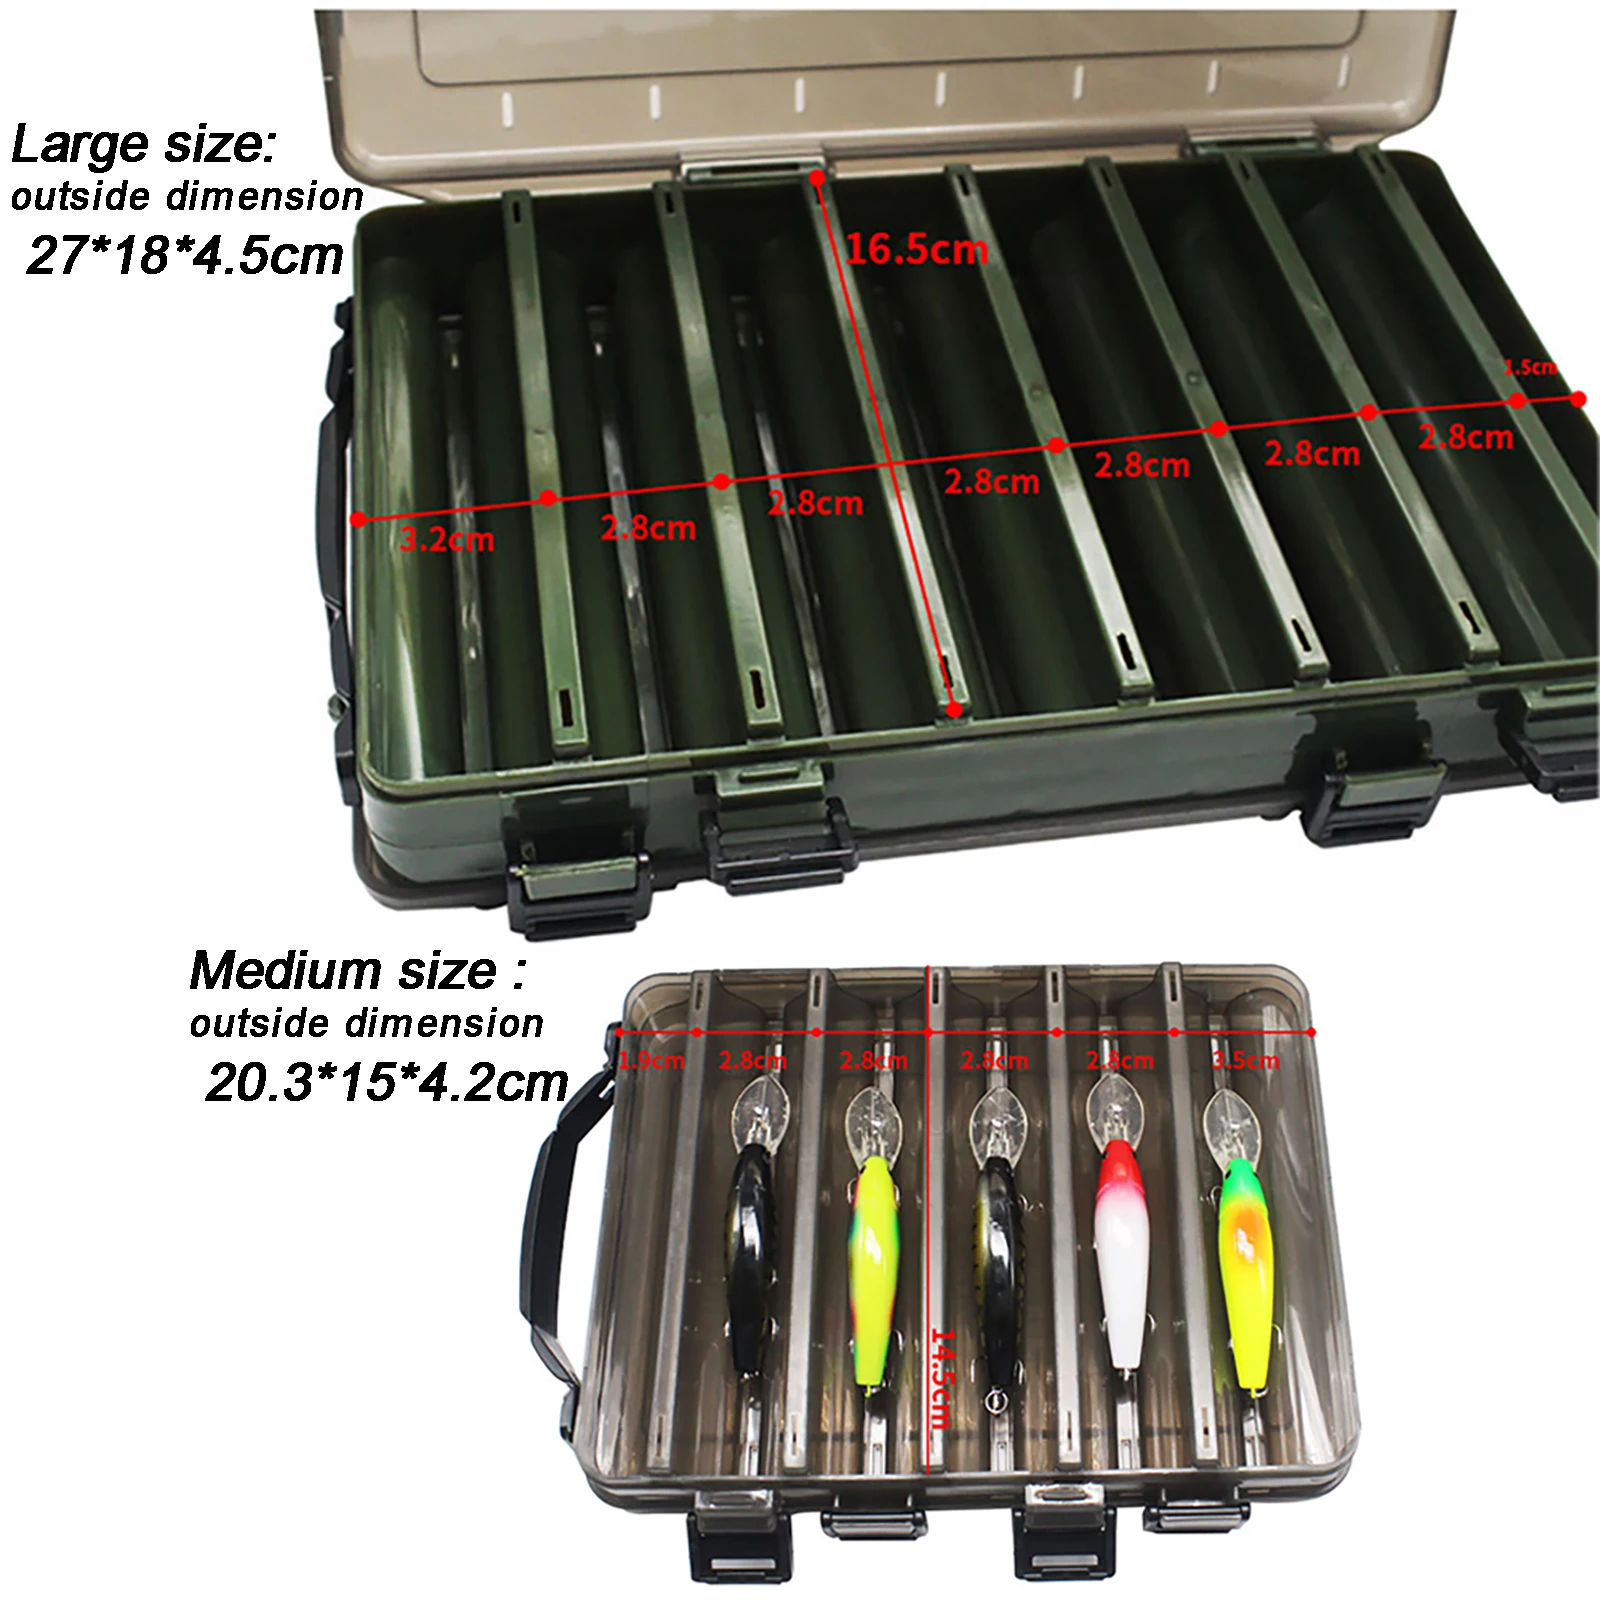 Slp Tools Boxlarge Fishing Tackle Box With Compartments